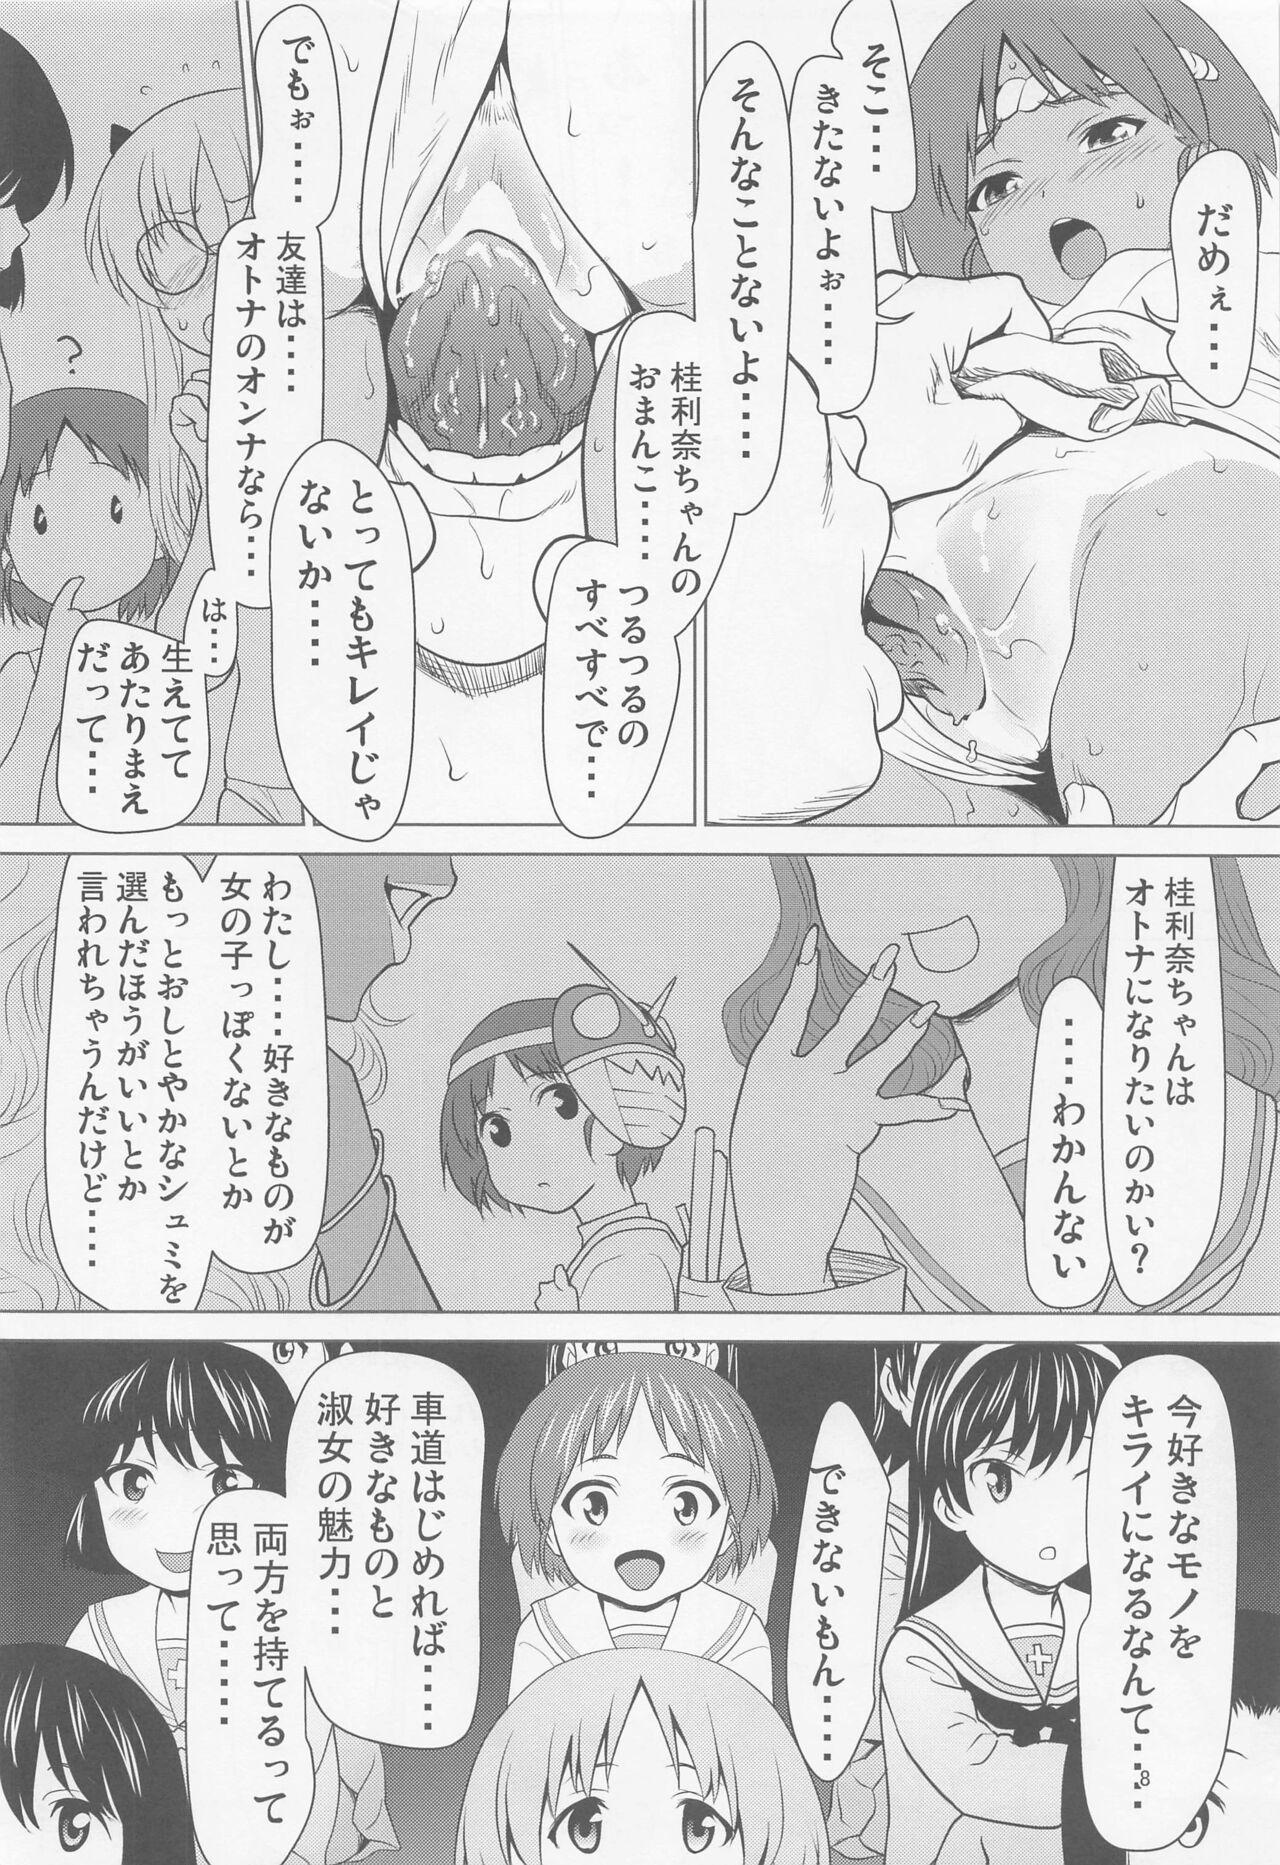 Studs hiyakefundoshinokarinachantomonokagede・・・・ Madura - Page 7